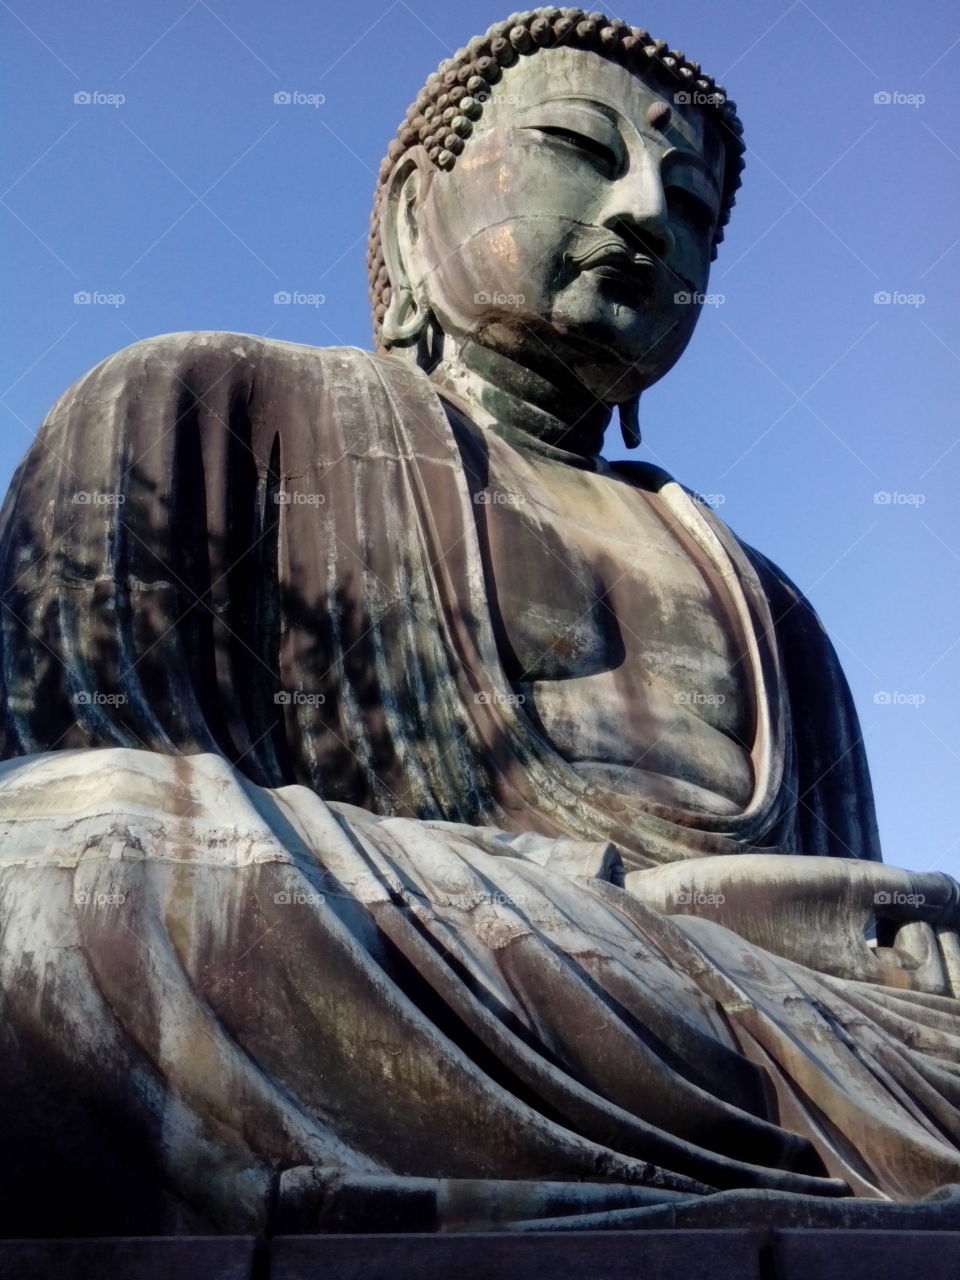 Buddha. A Buddha statue located in Japan.